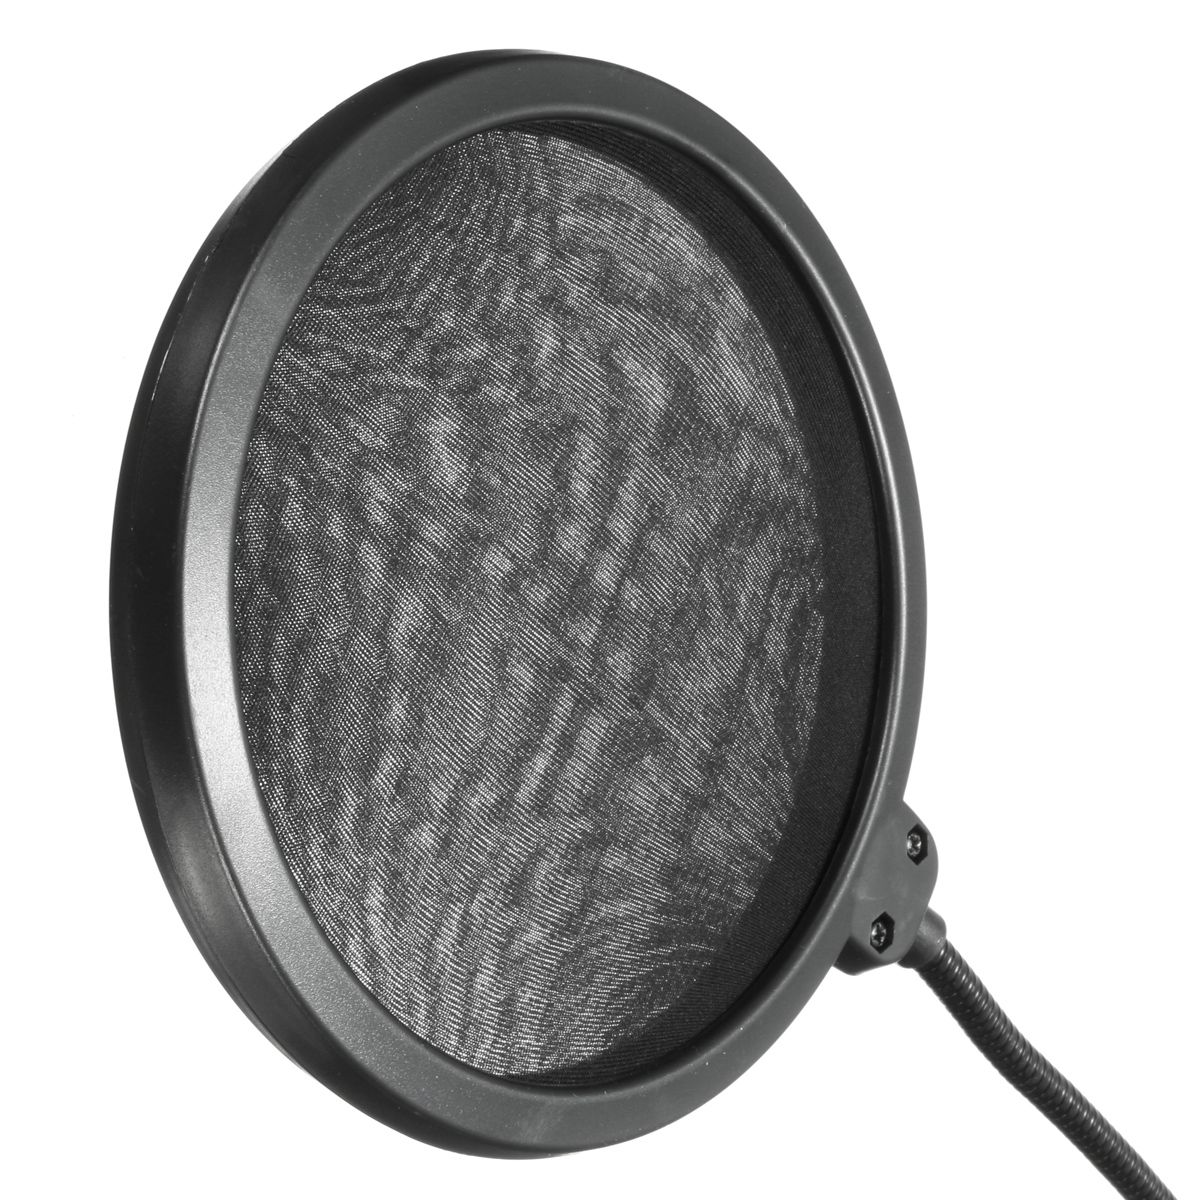 Flexible-Dual-Double-Layer-Record-Studio-Microphone-Professional-Mic-Windscreen-Pop-Filter-Shield-1175132